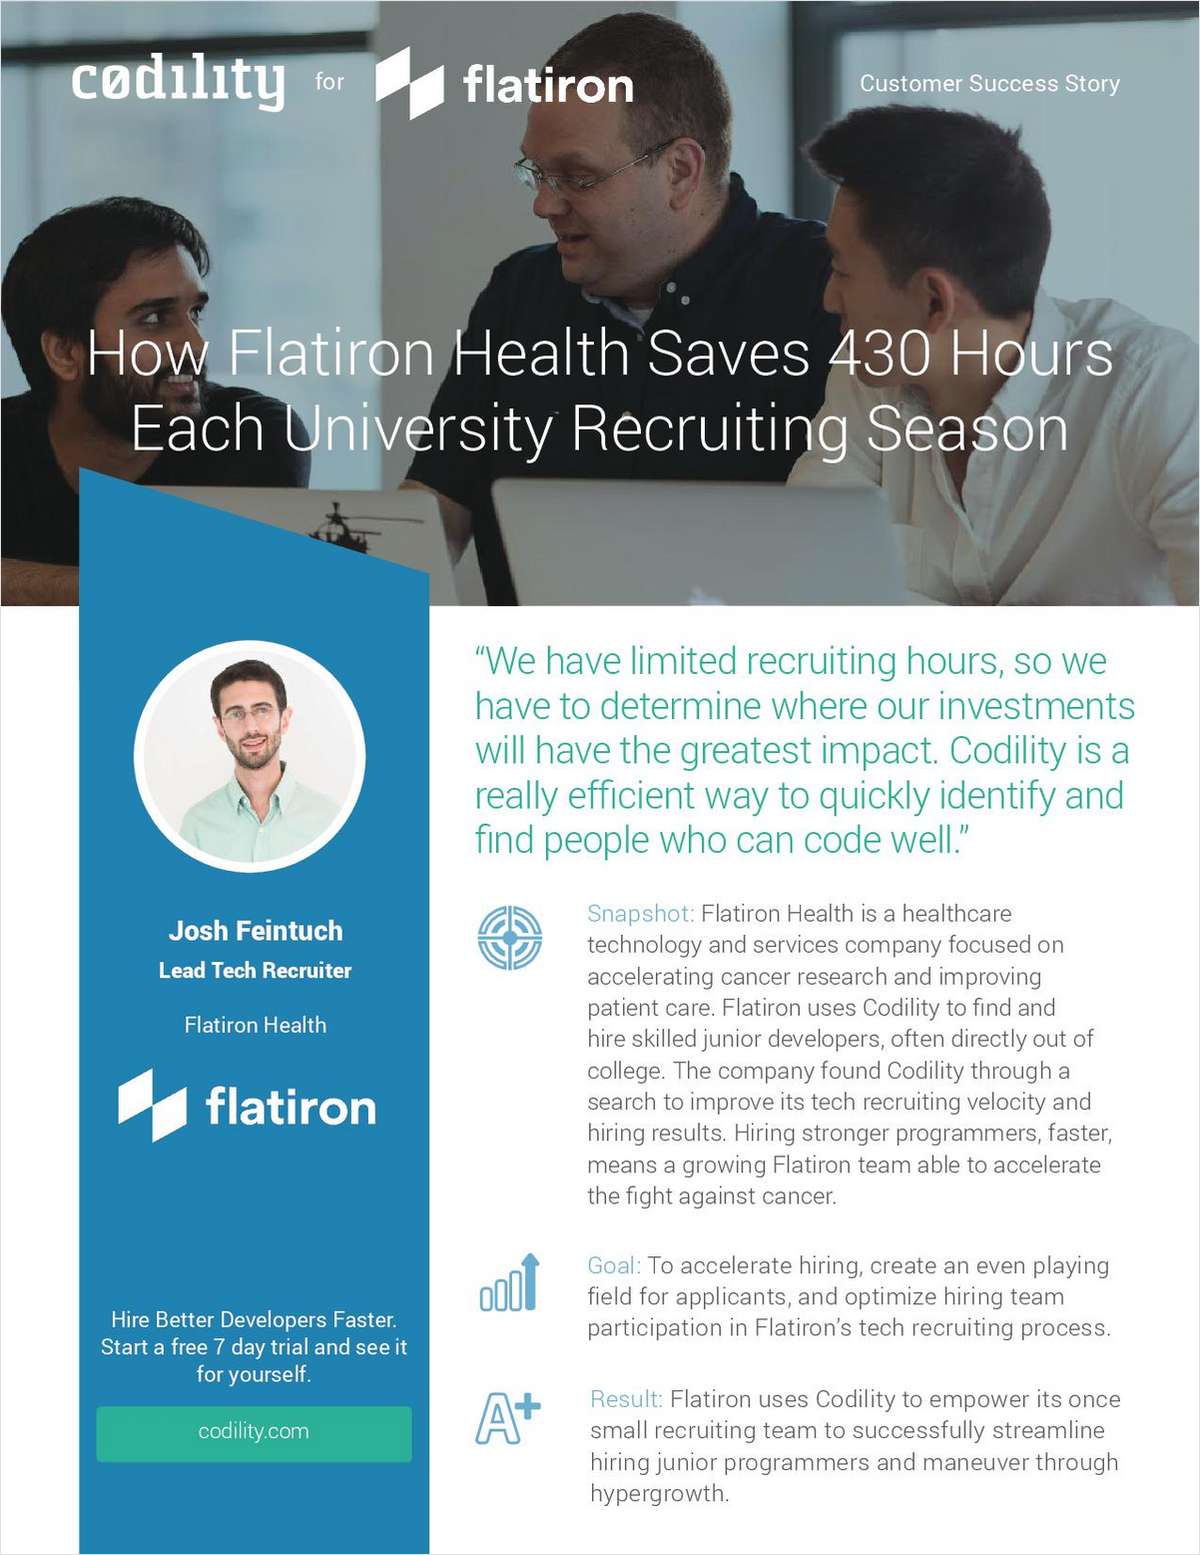 How Flatiron Health Saves 430 Hours Each University Recruiting Season